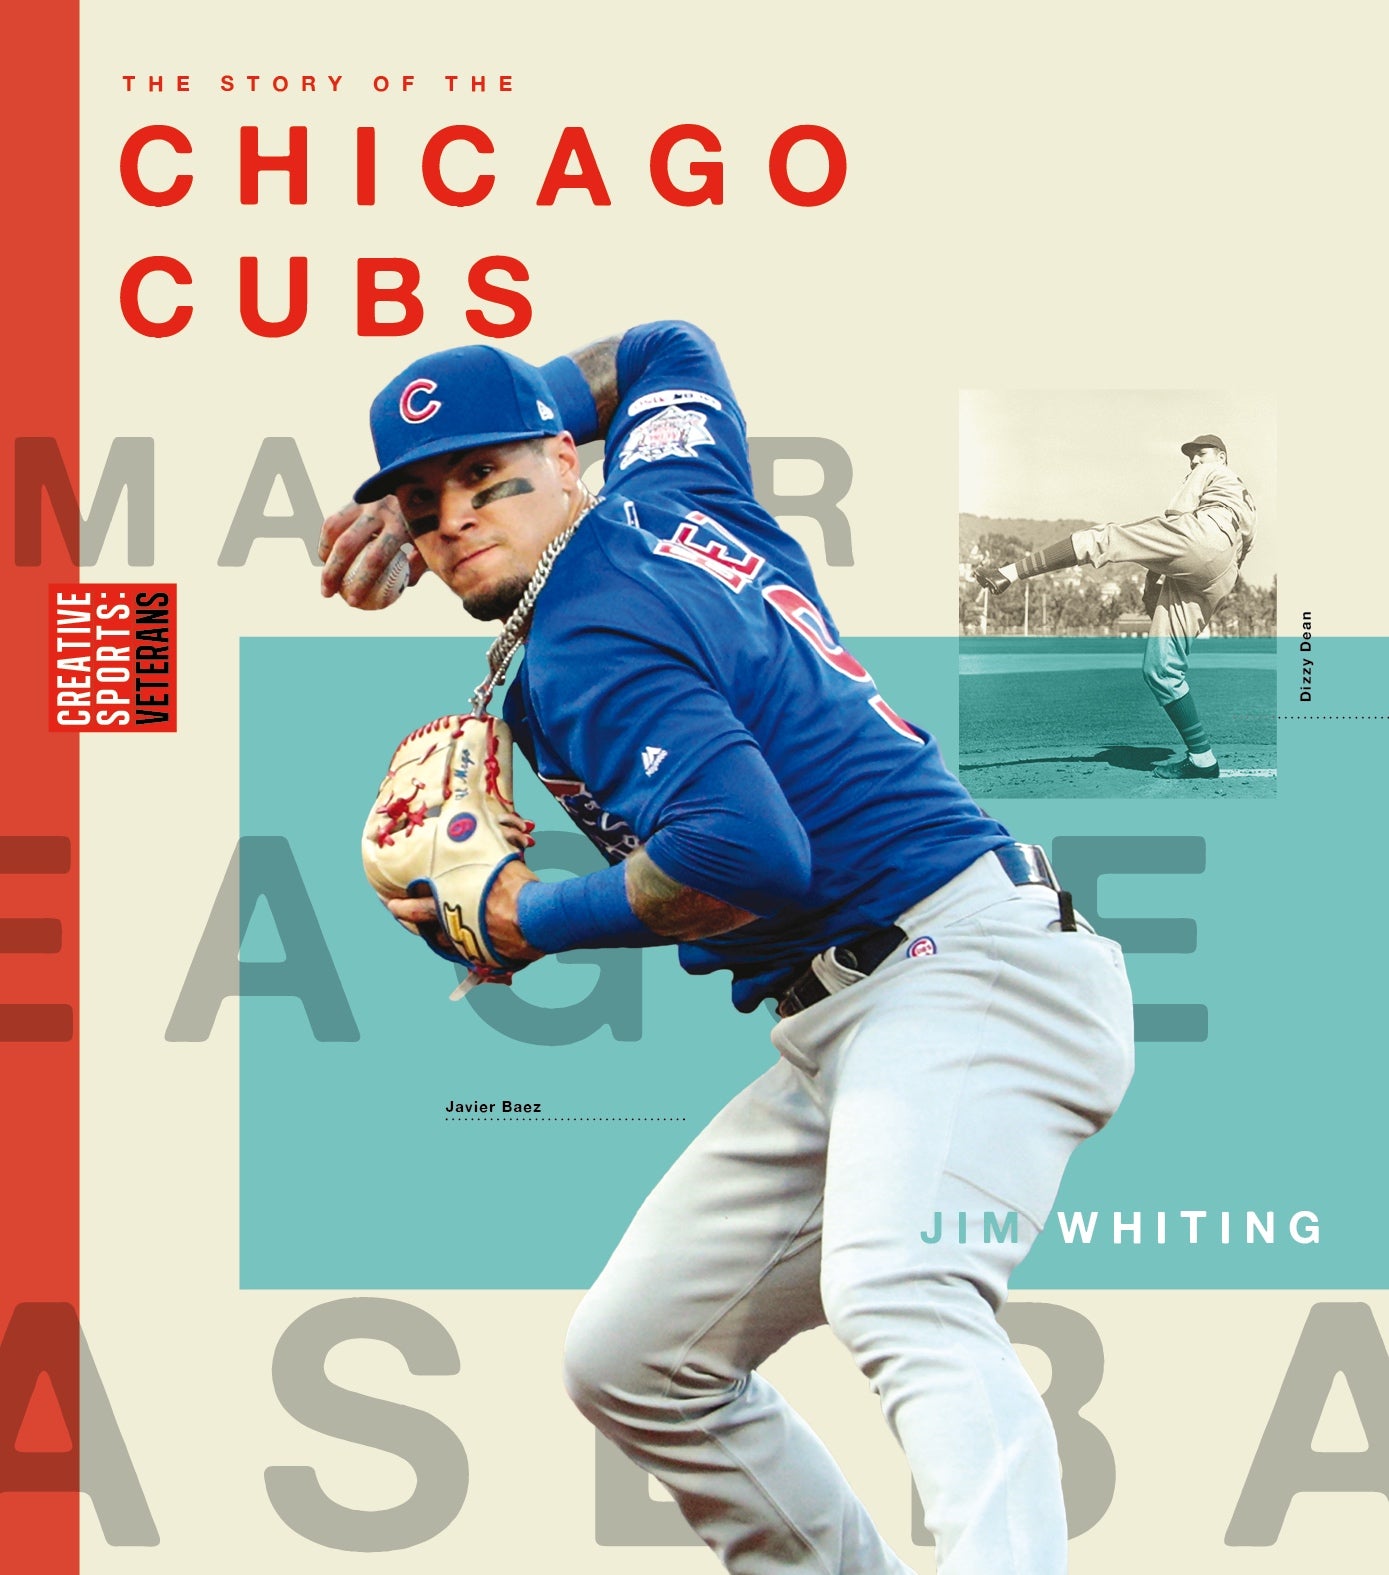 Kreativer Sport: Chicago Cubs